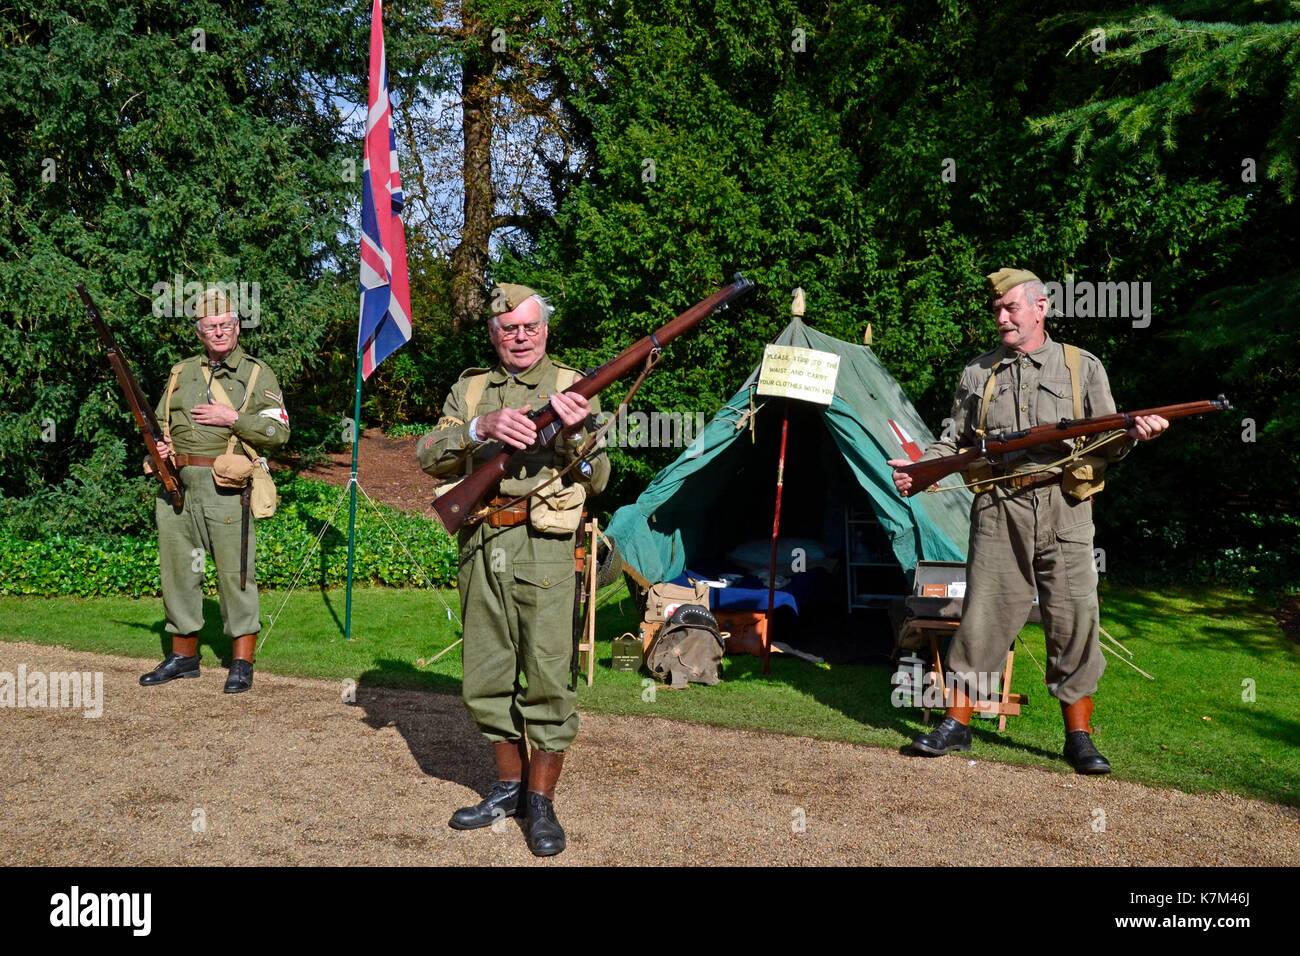 Home front, british soldiers, re-enactors, 1940s event, uk Stock Photo